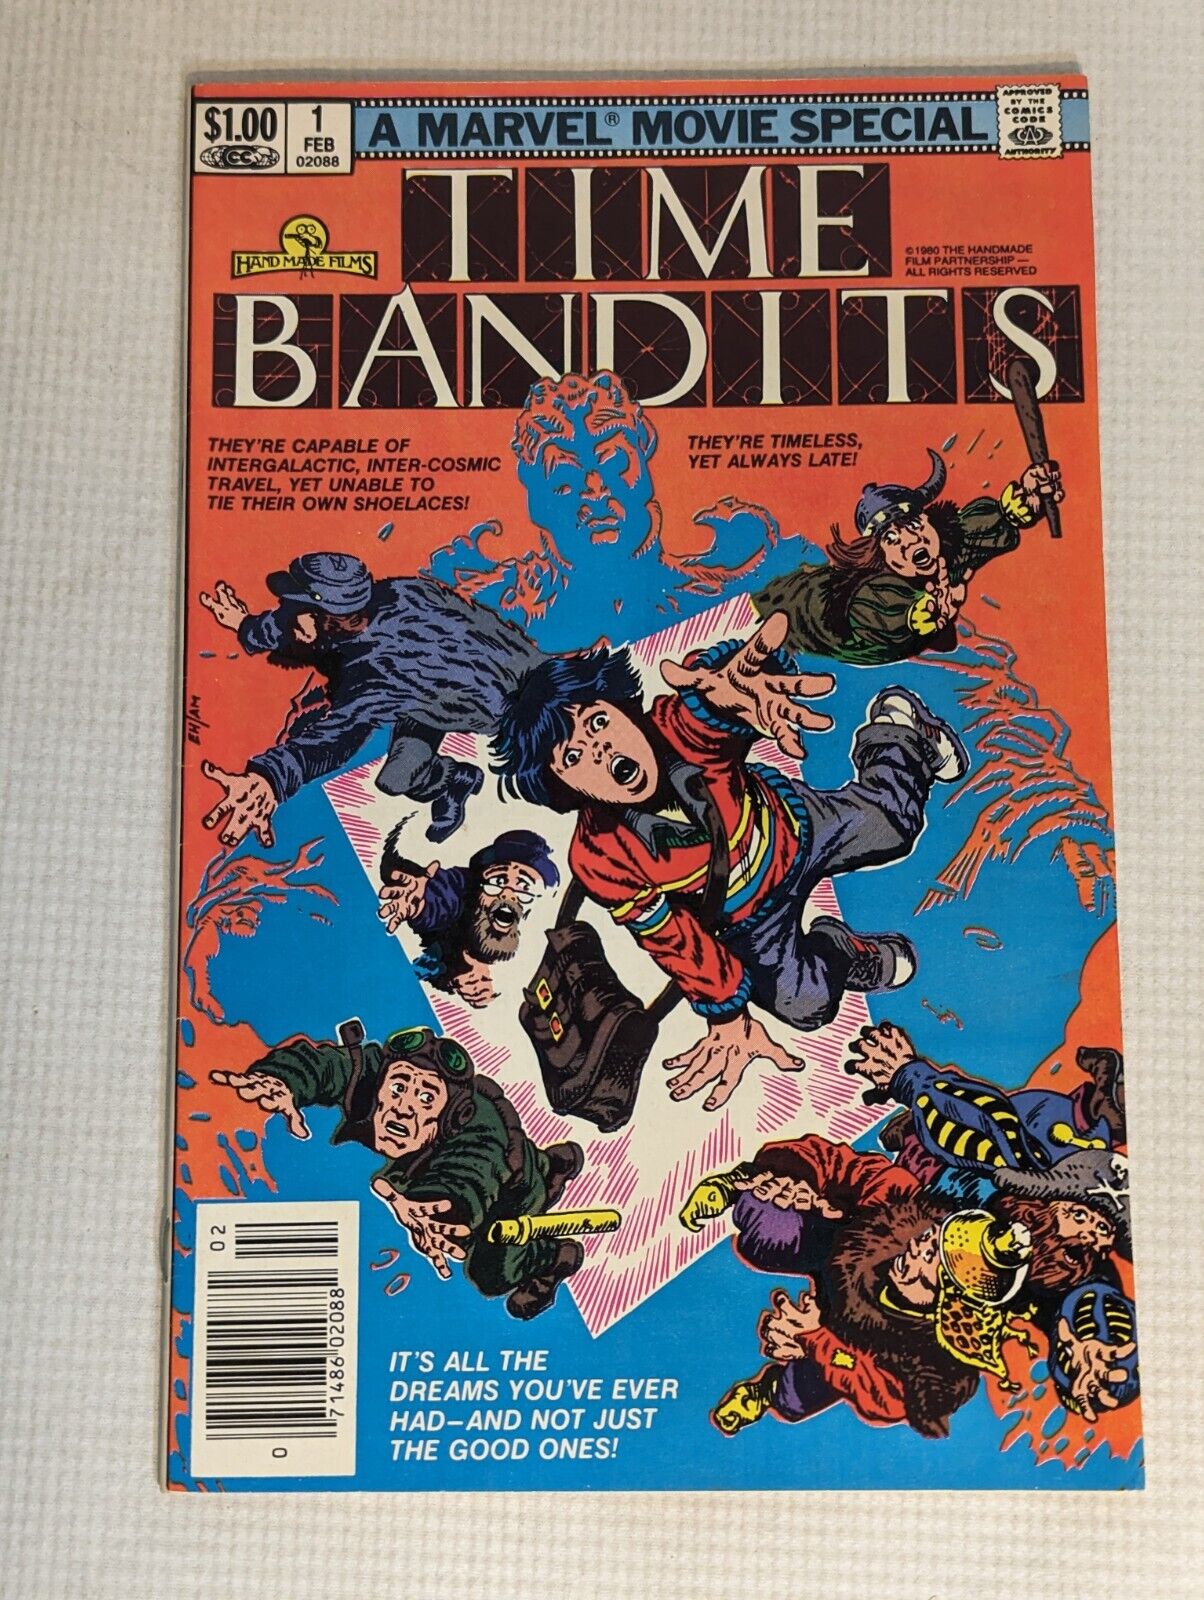 Time Bandits #1 1982 VG+ Marvel Movie Special Rare VTG Comic John Cleese Sci-Fi